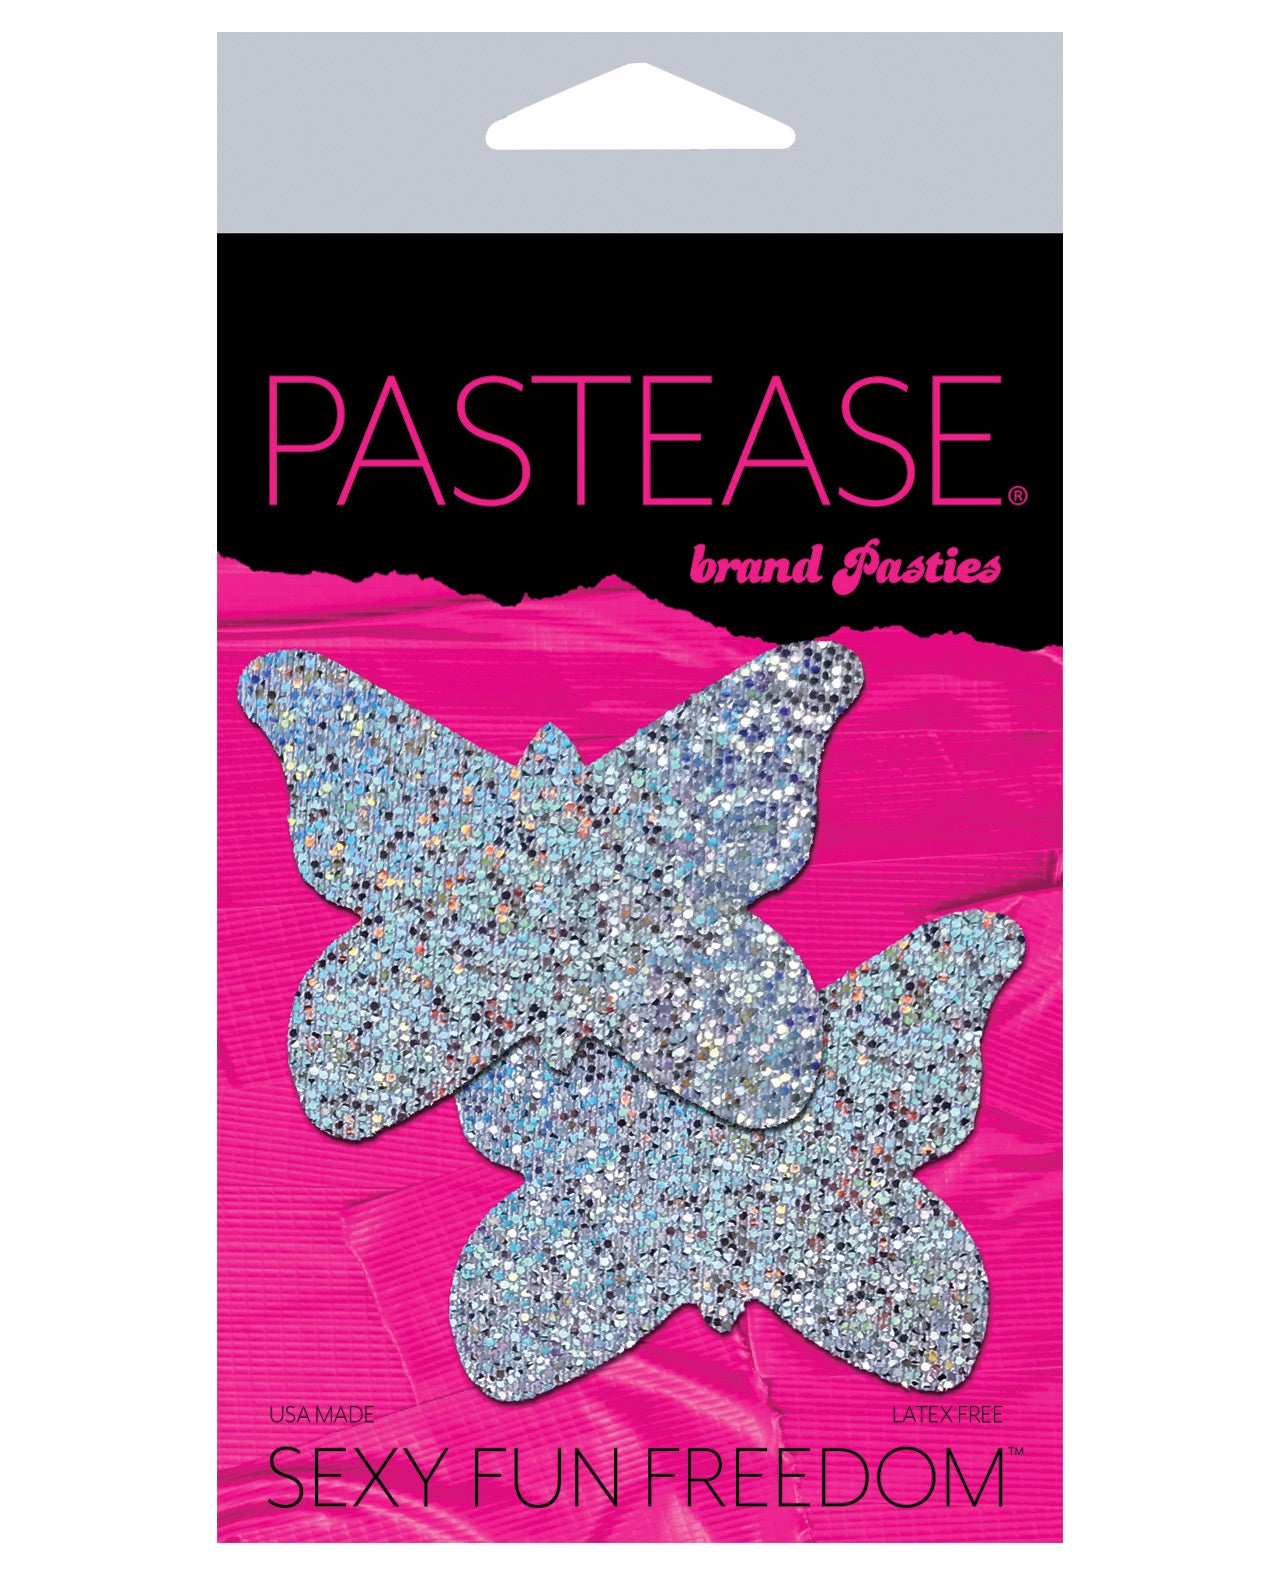 Pastease